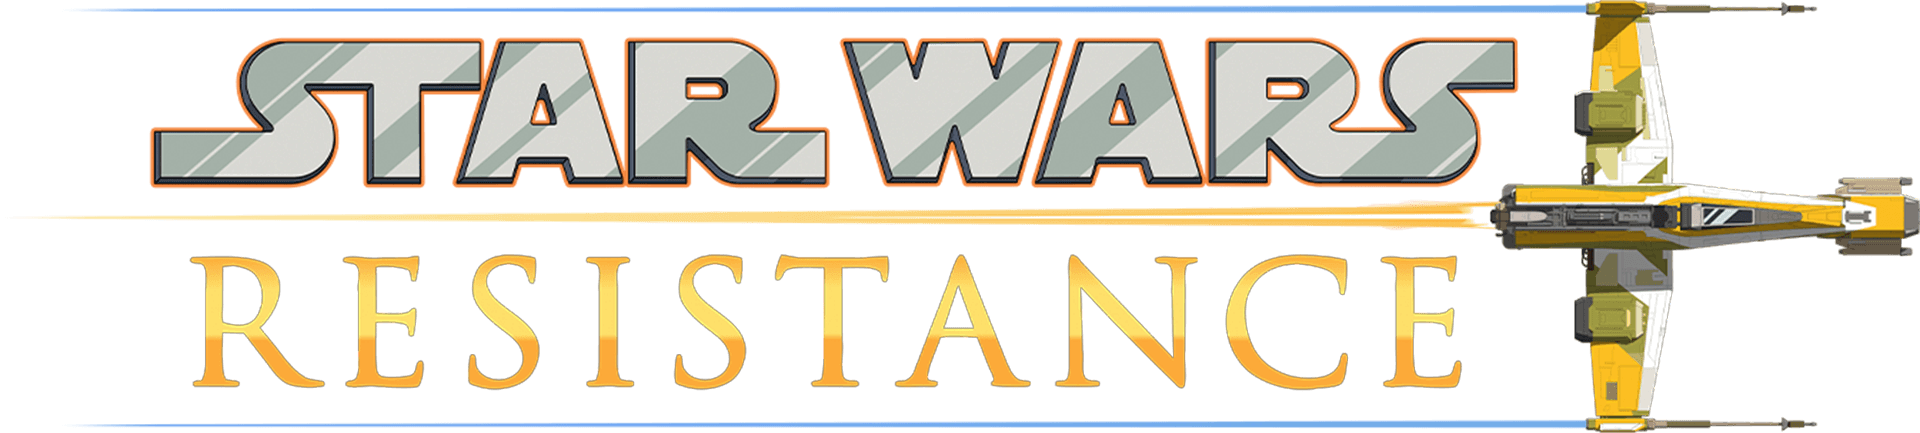 Star Wars Resistance logo